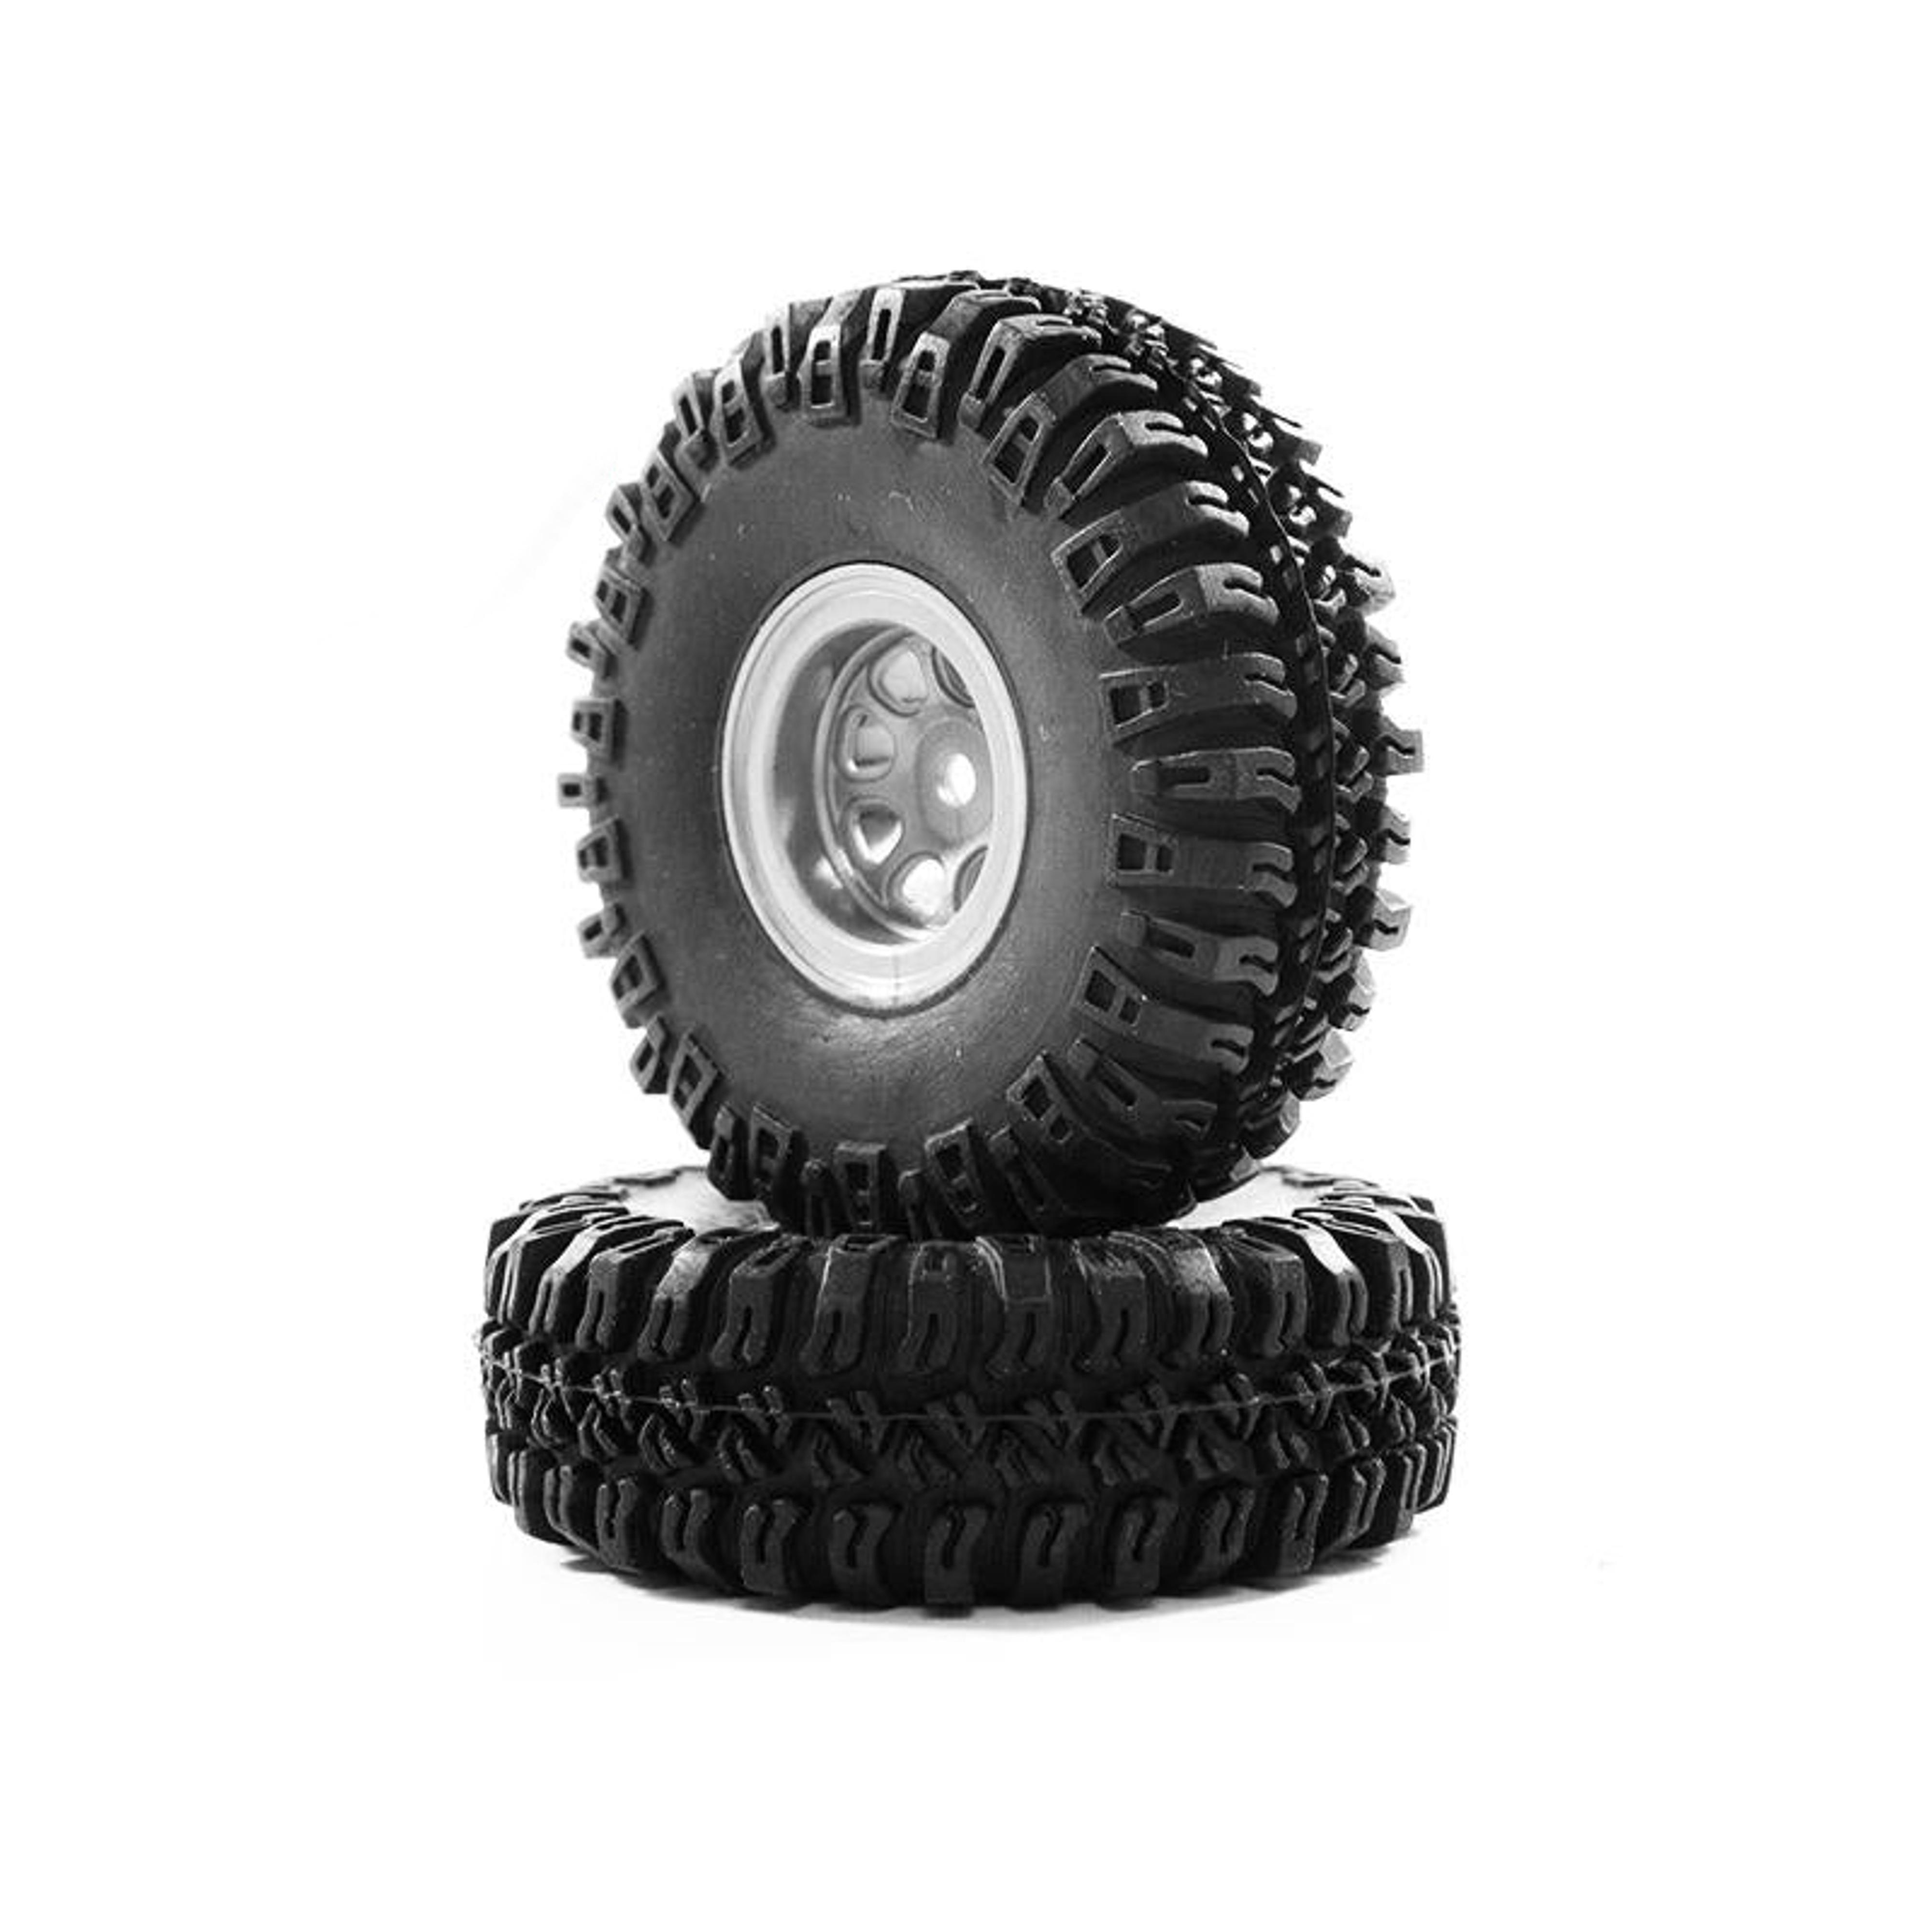 IMEX 1.0 Grabber M/T Tire and Beadlock Rims (1 pair, grey)